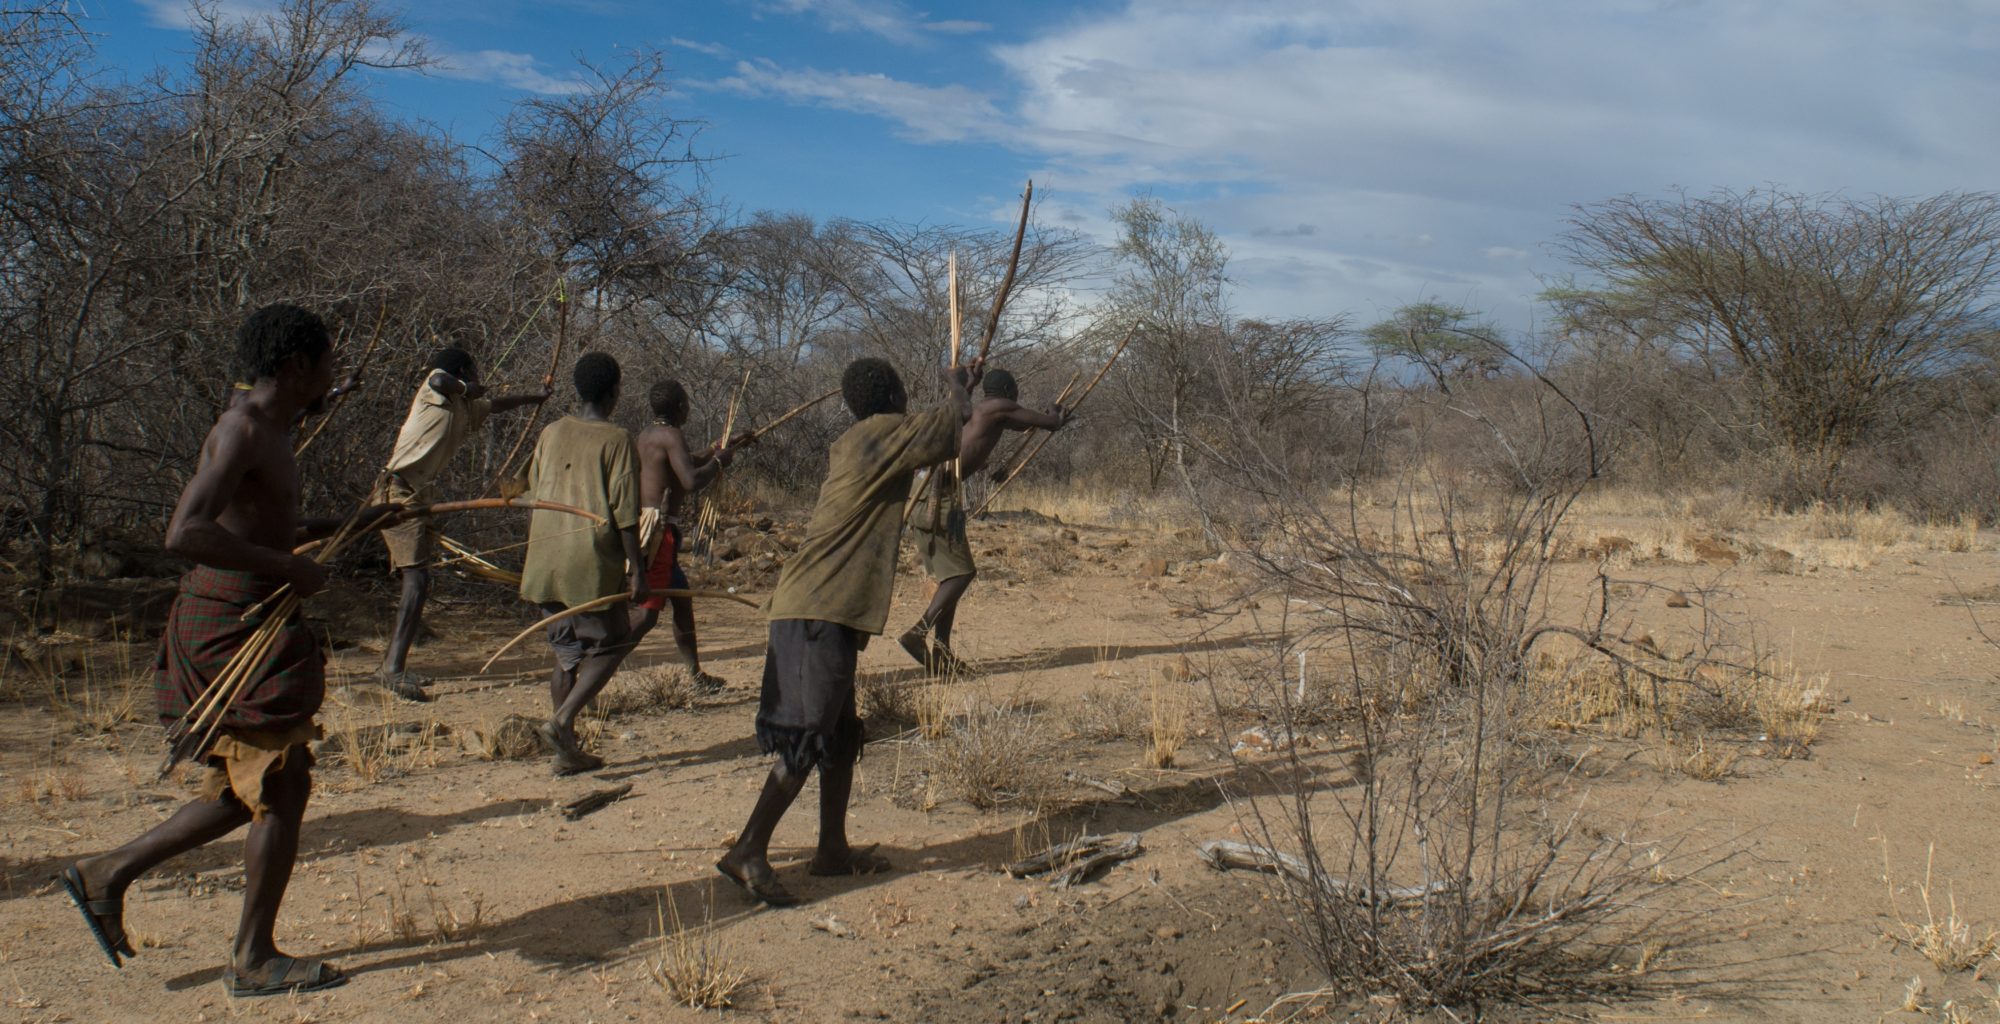 Tanzania-Dorobo-Mobile-Camp-Hunting